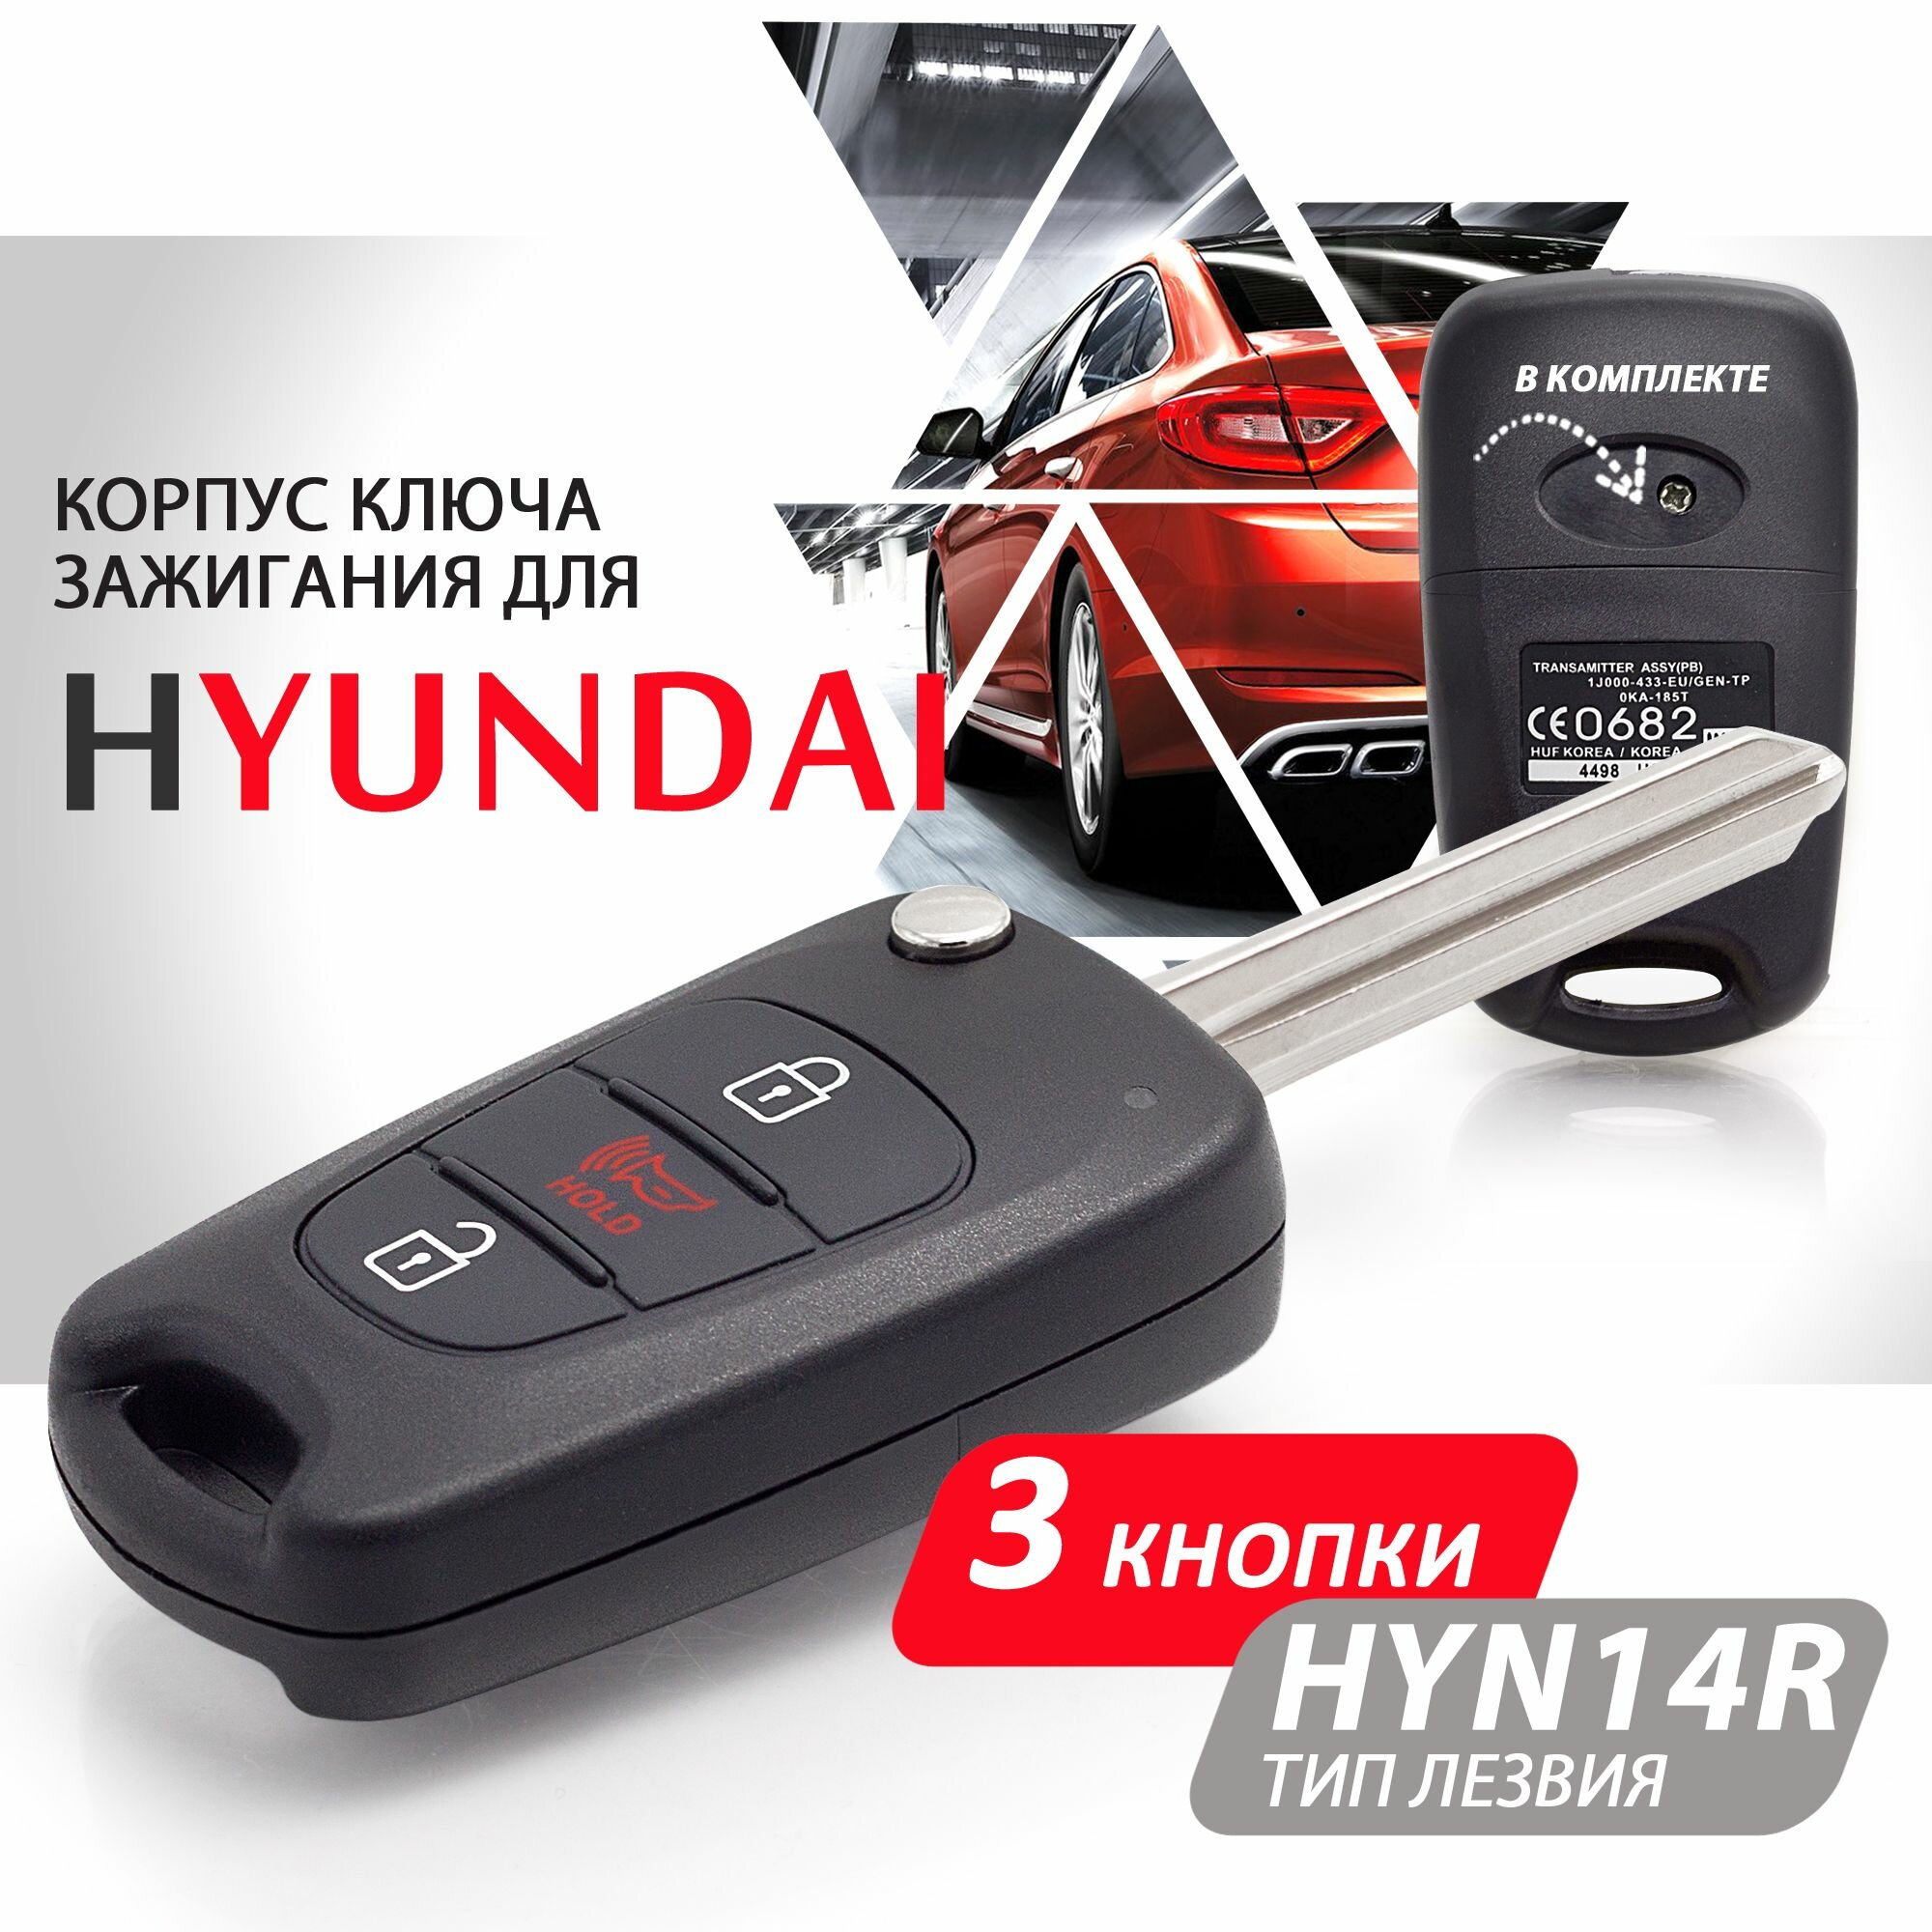 Корпус ключа зажигания для Hyundai Solaris Elantra Accent ix35 ix20 i20 i30 i40 / Хендай Солярис Элантра Акцент - 1 штука (3х кнопочный ключ с Panic) лезвие HYN14R